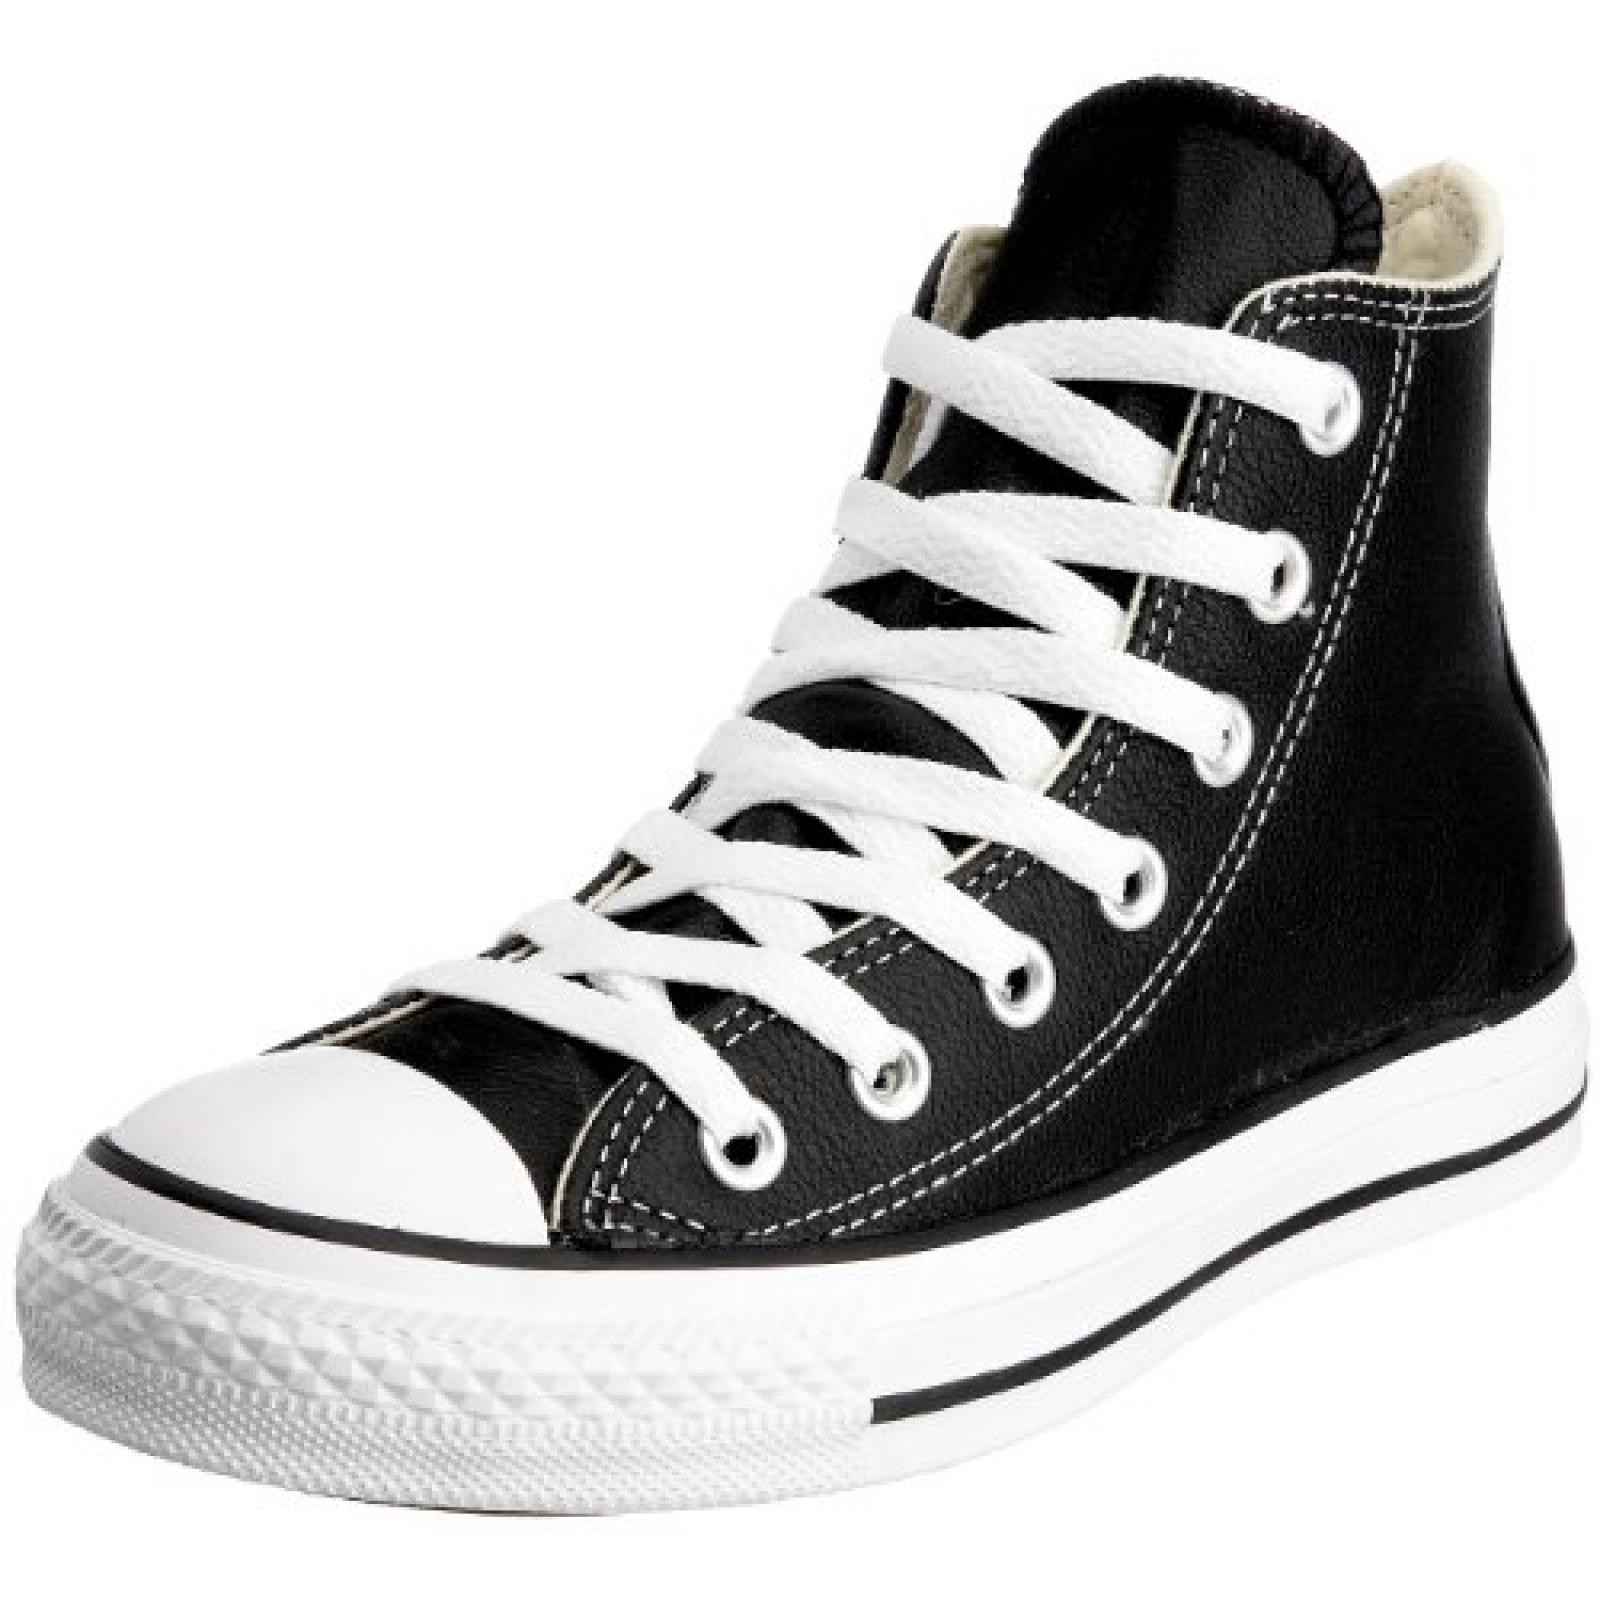 Converse Leather All Star, Unisex - Erwachsene Sneaker 